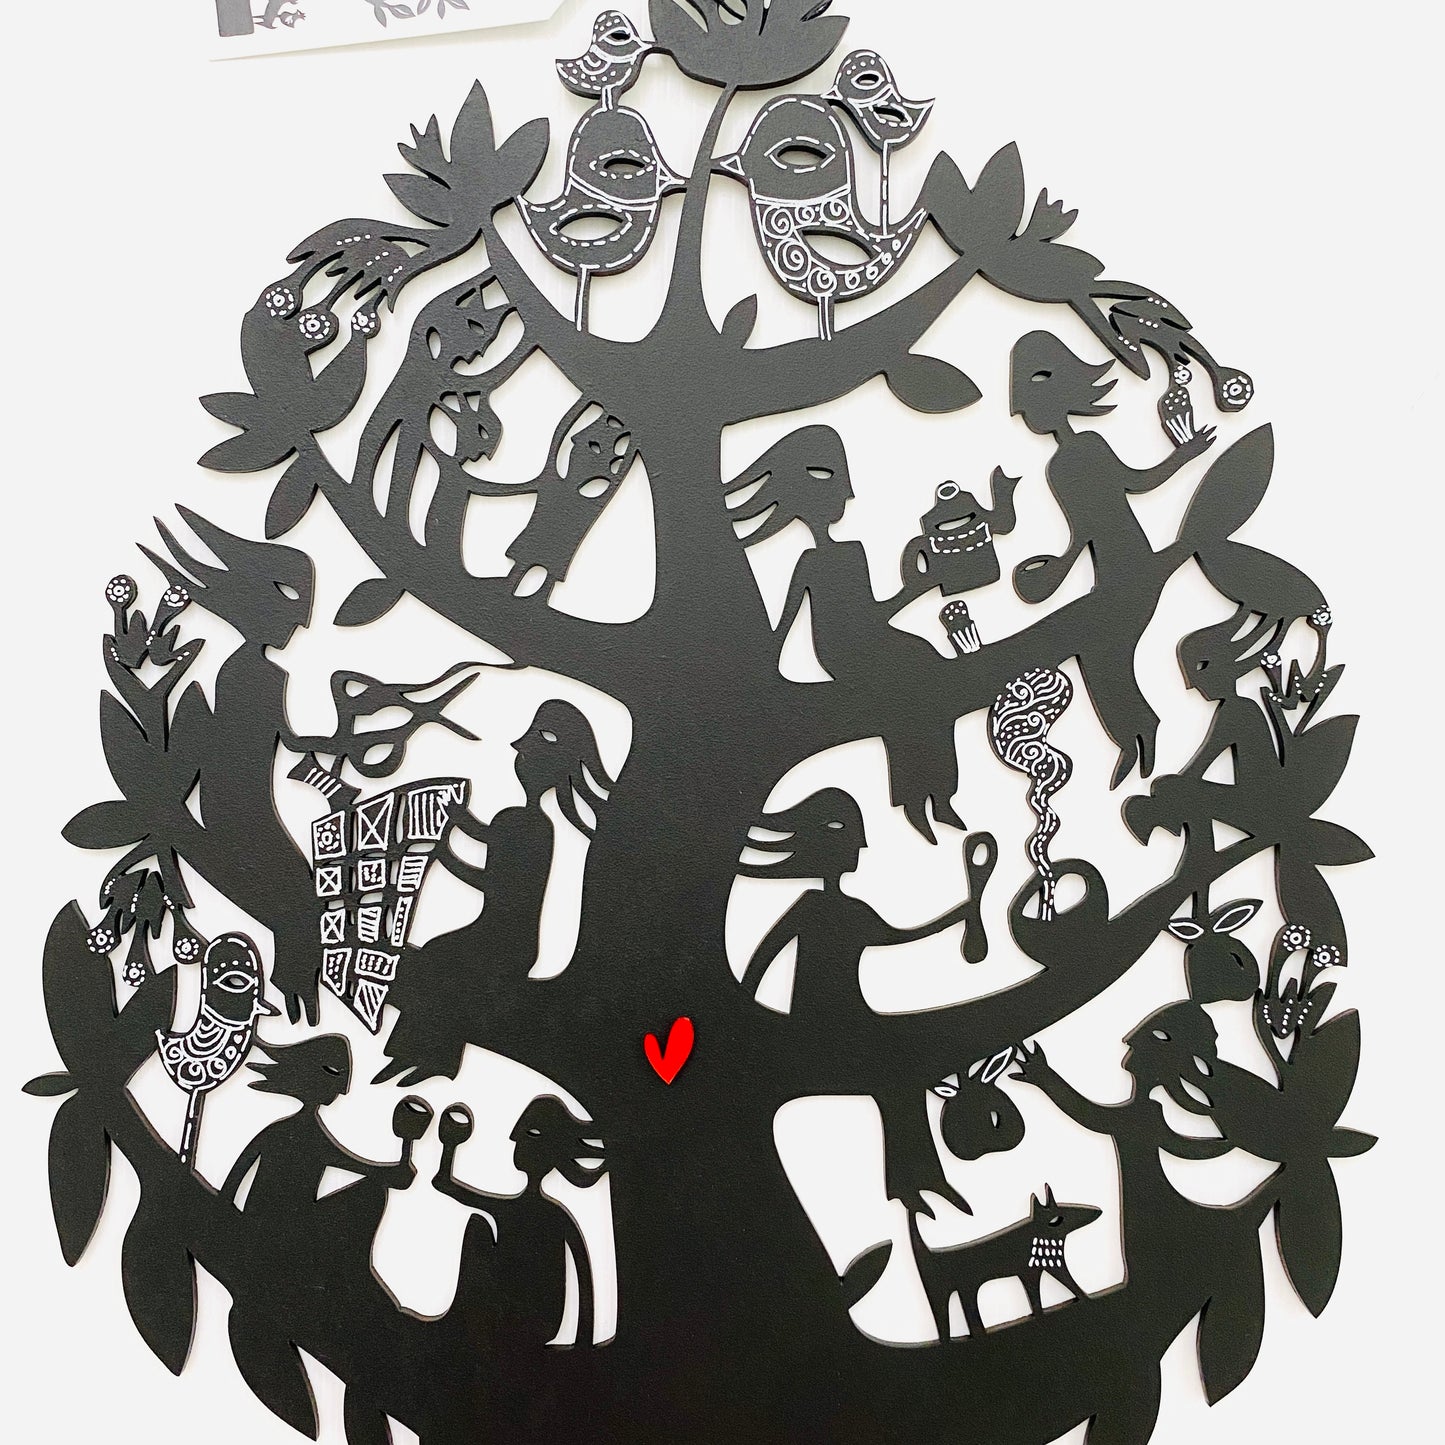 This Papercut Life Friendship Tree